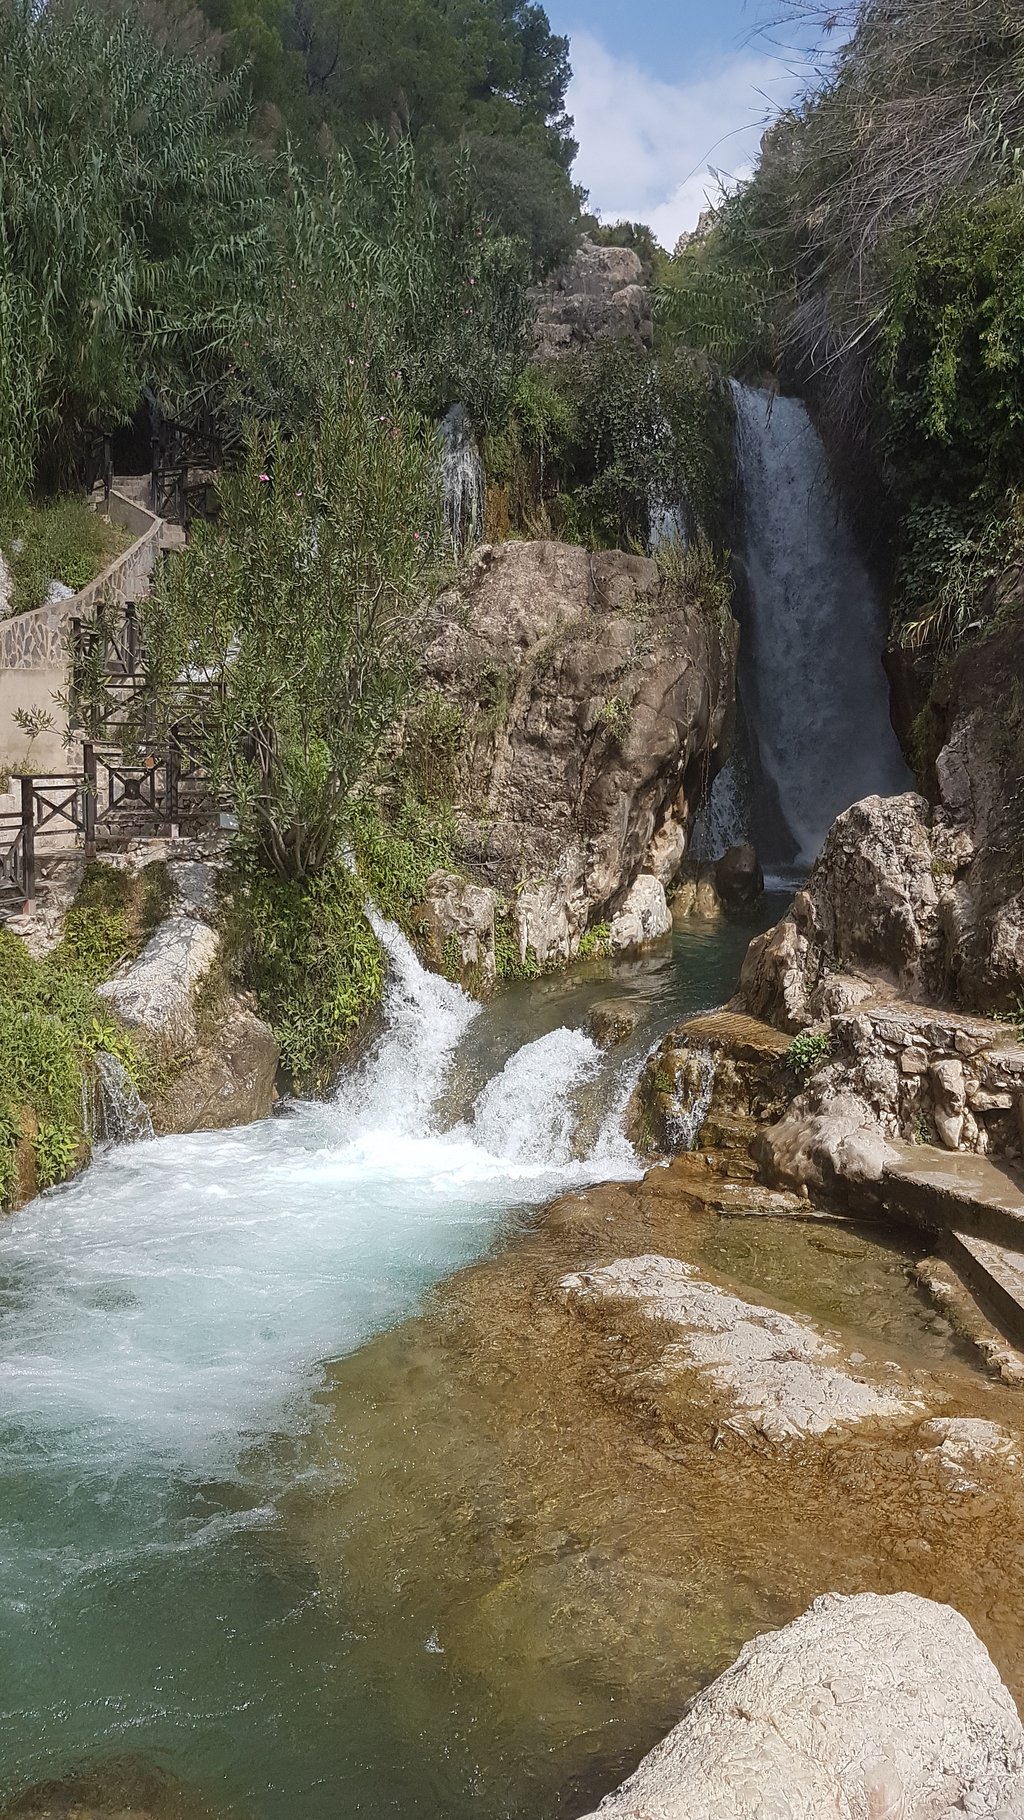 One of the Algar waterfalls